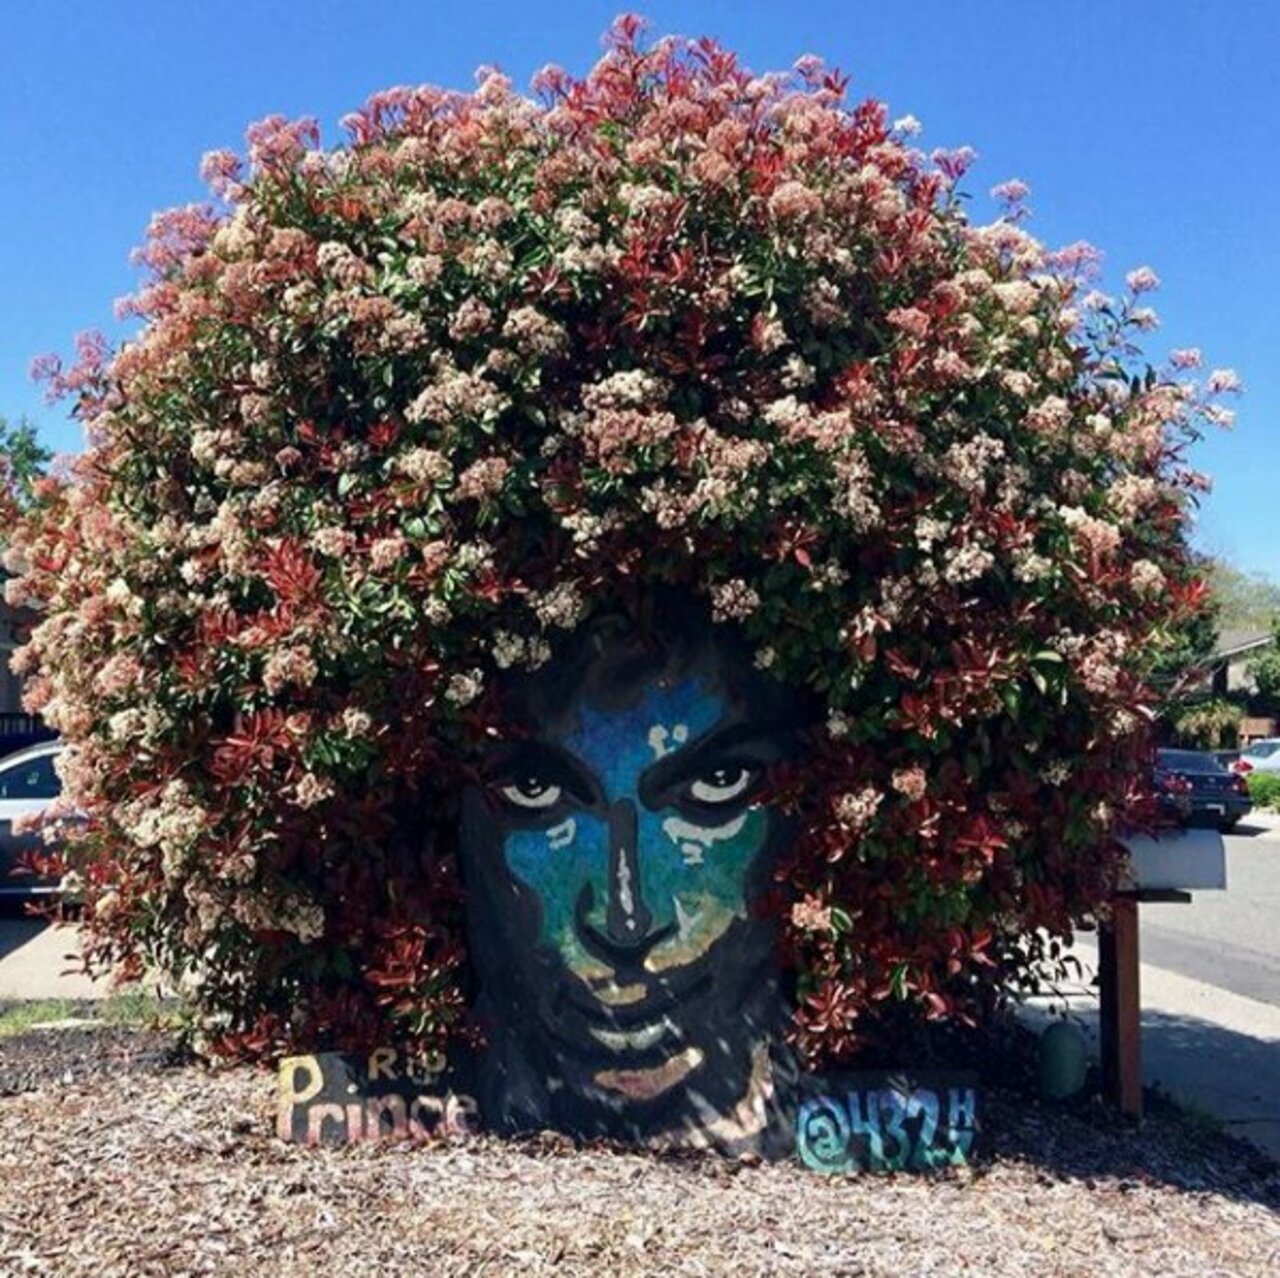 A tribute to Prince in full bloom, by 432HZ! -- #globalstreetart #streetart #art #graffiti https://t.co/gr23pFhWTj